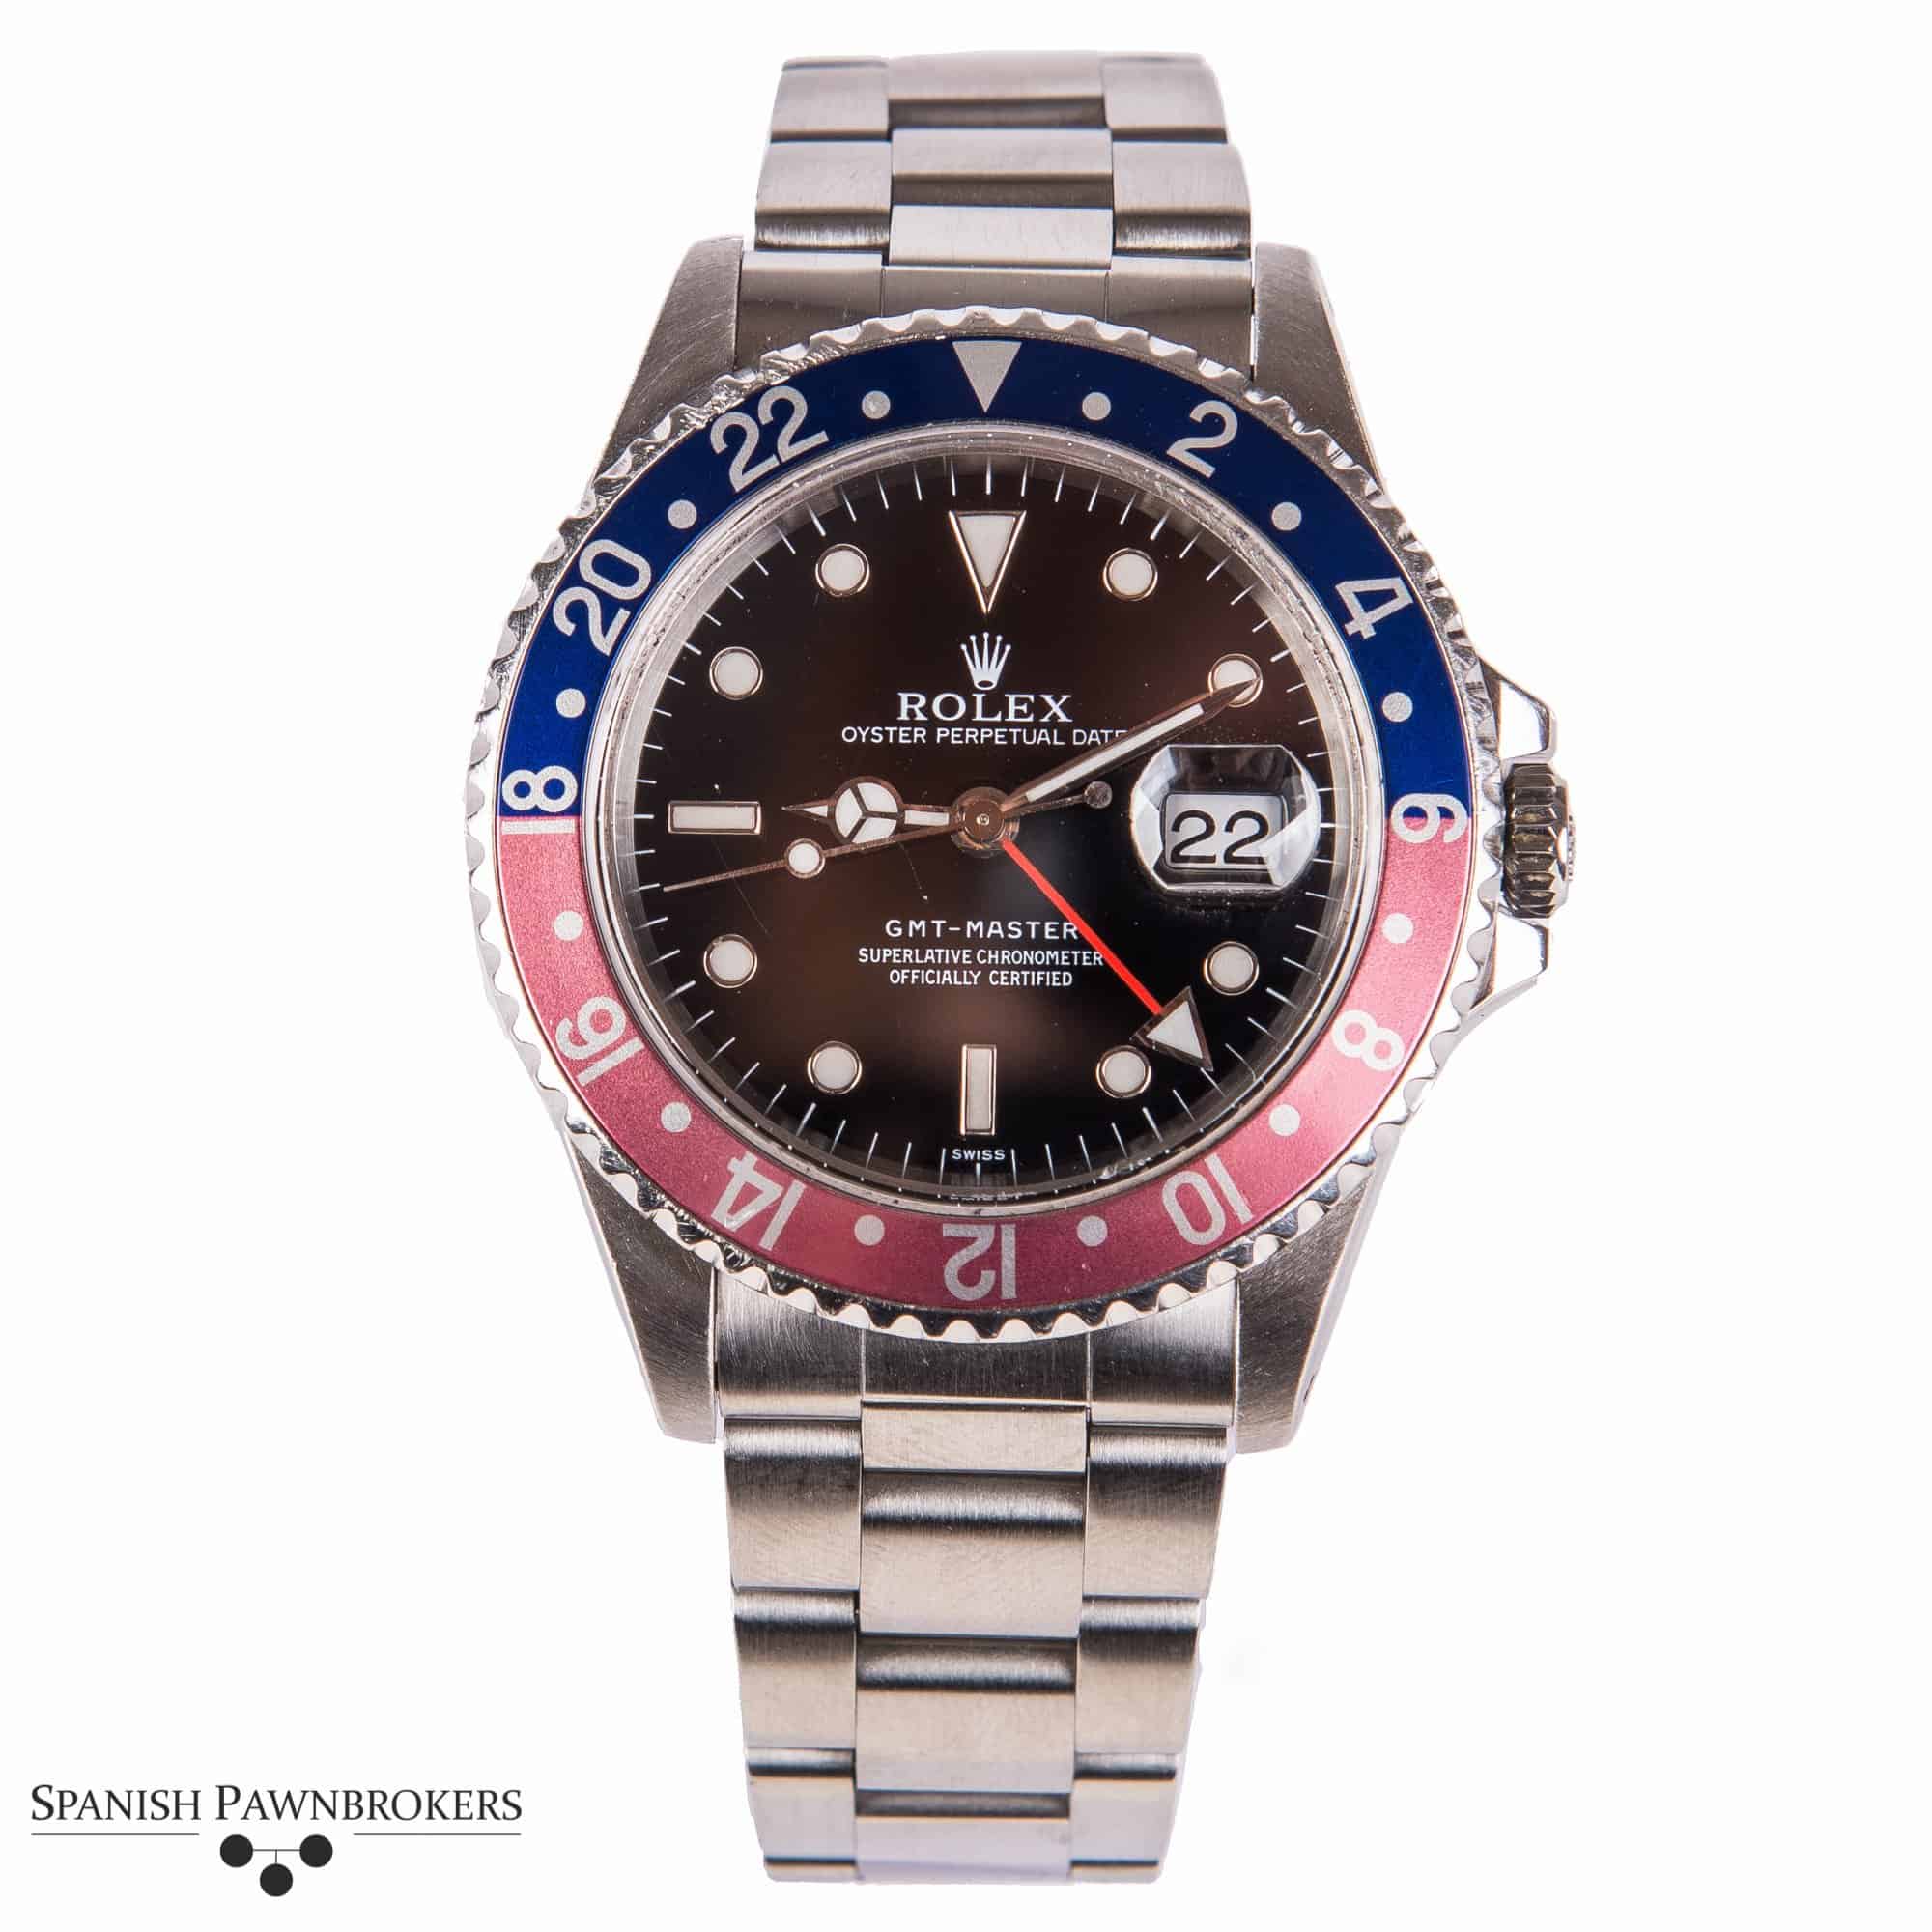 Muslo Pedir prestado Odio Selling your Rolex watch - Spanish Pawnbrokers